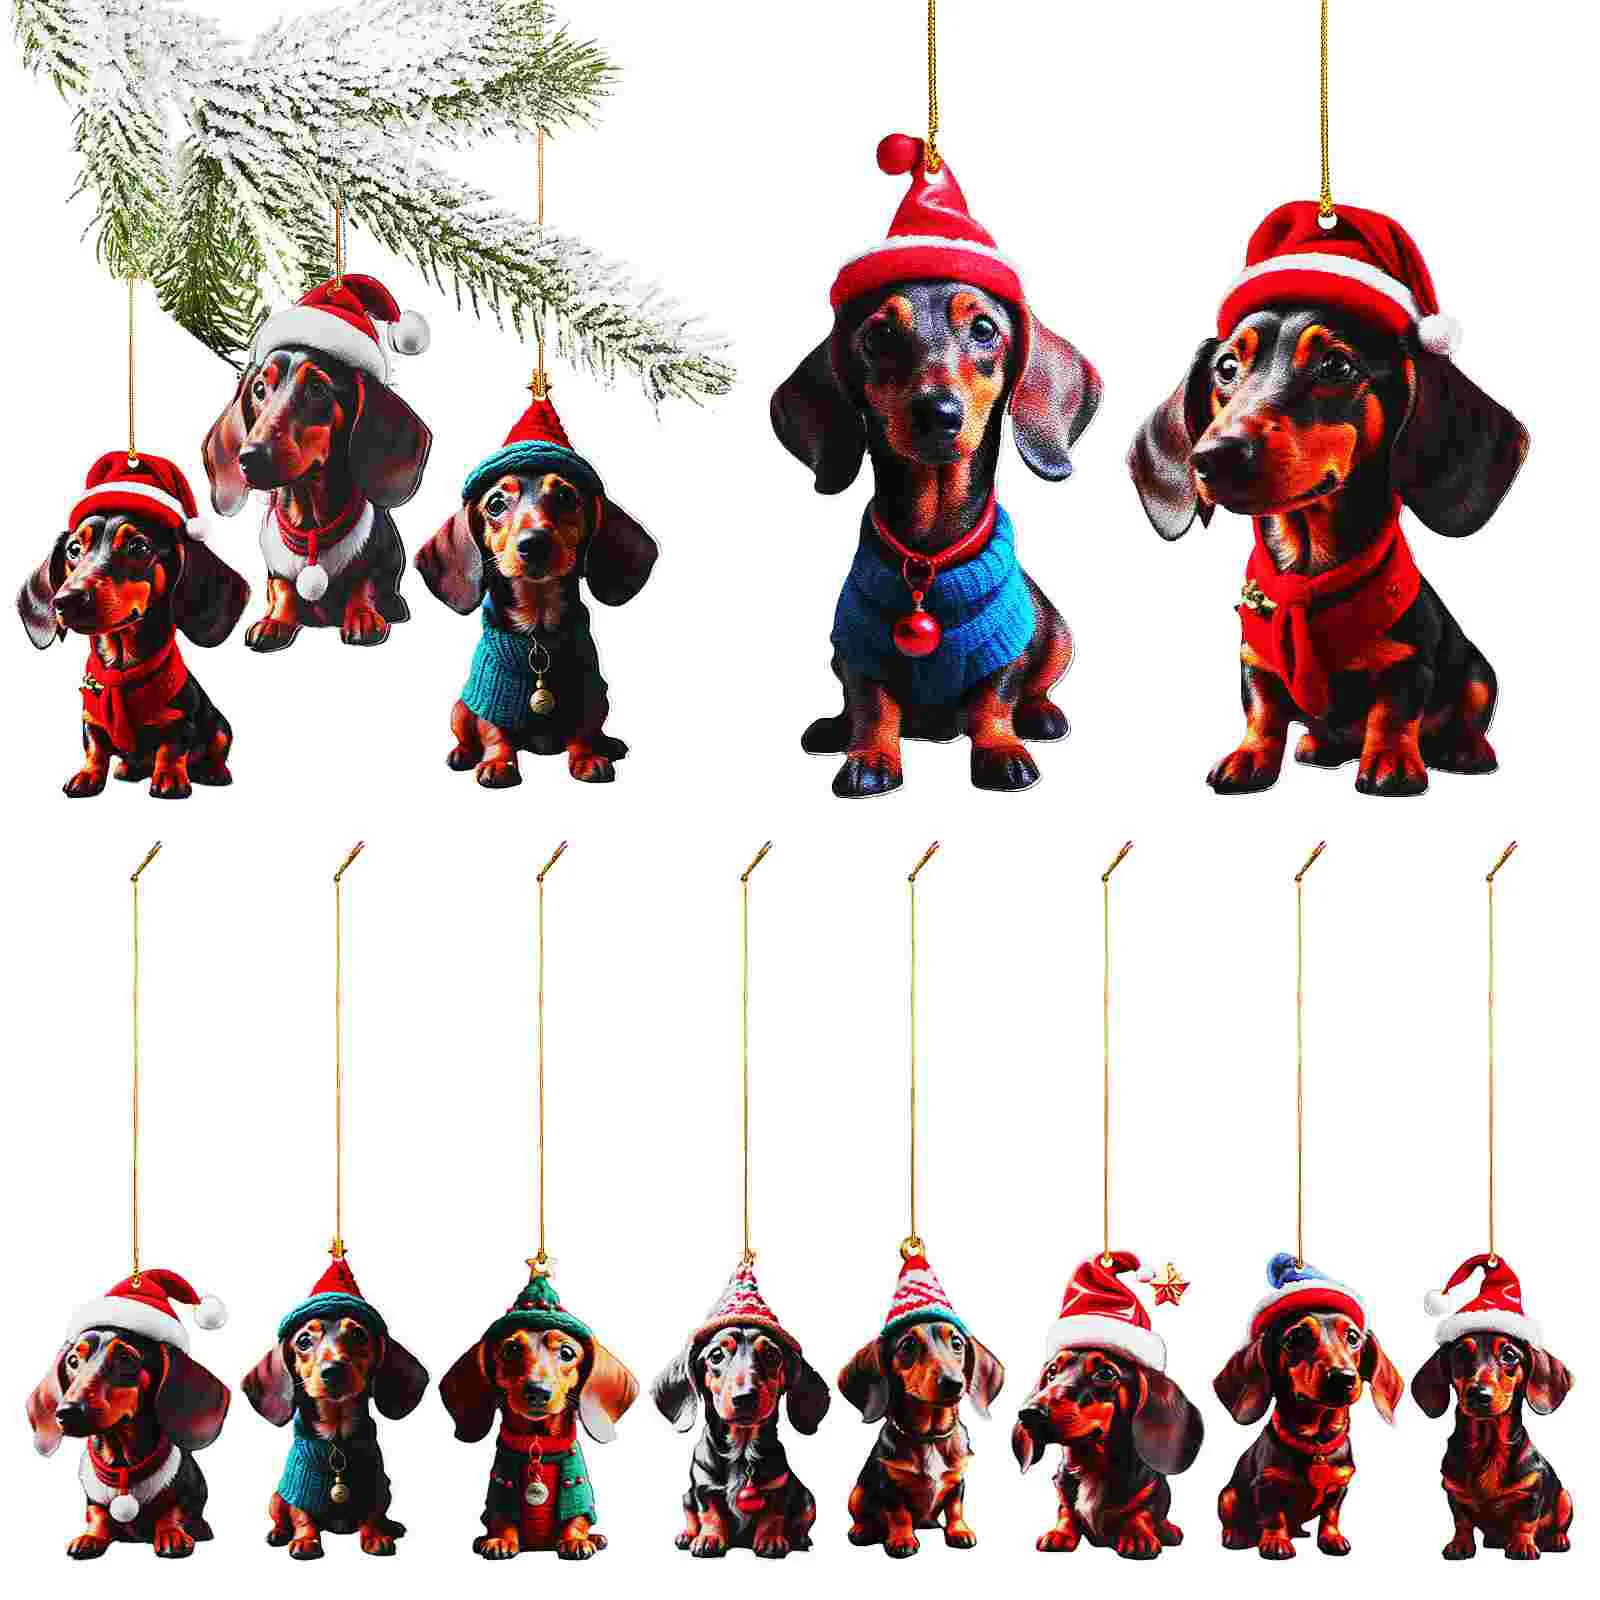 

10 Pcs Christmas Decorations Dachshund Hanging Car Accessories Tree Ornament Xmas Party Ornaments Pendant Decors